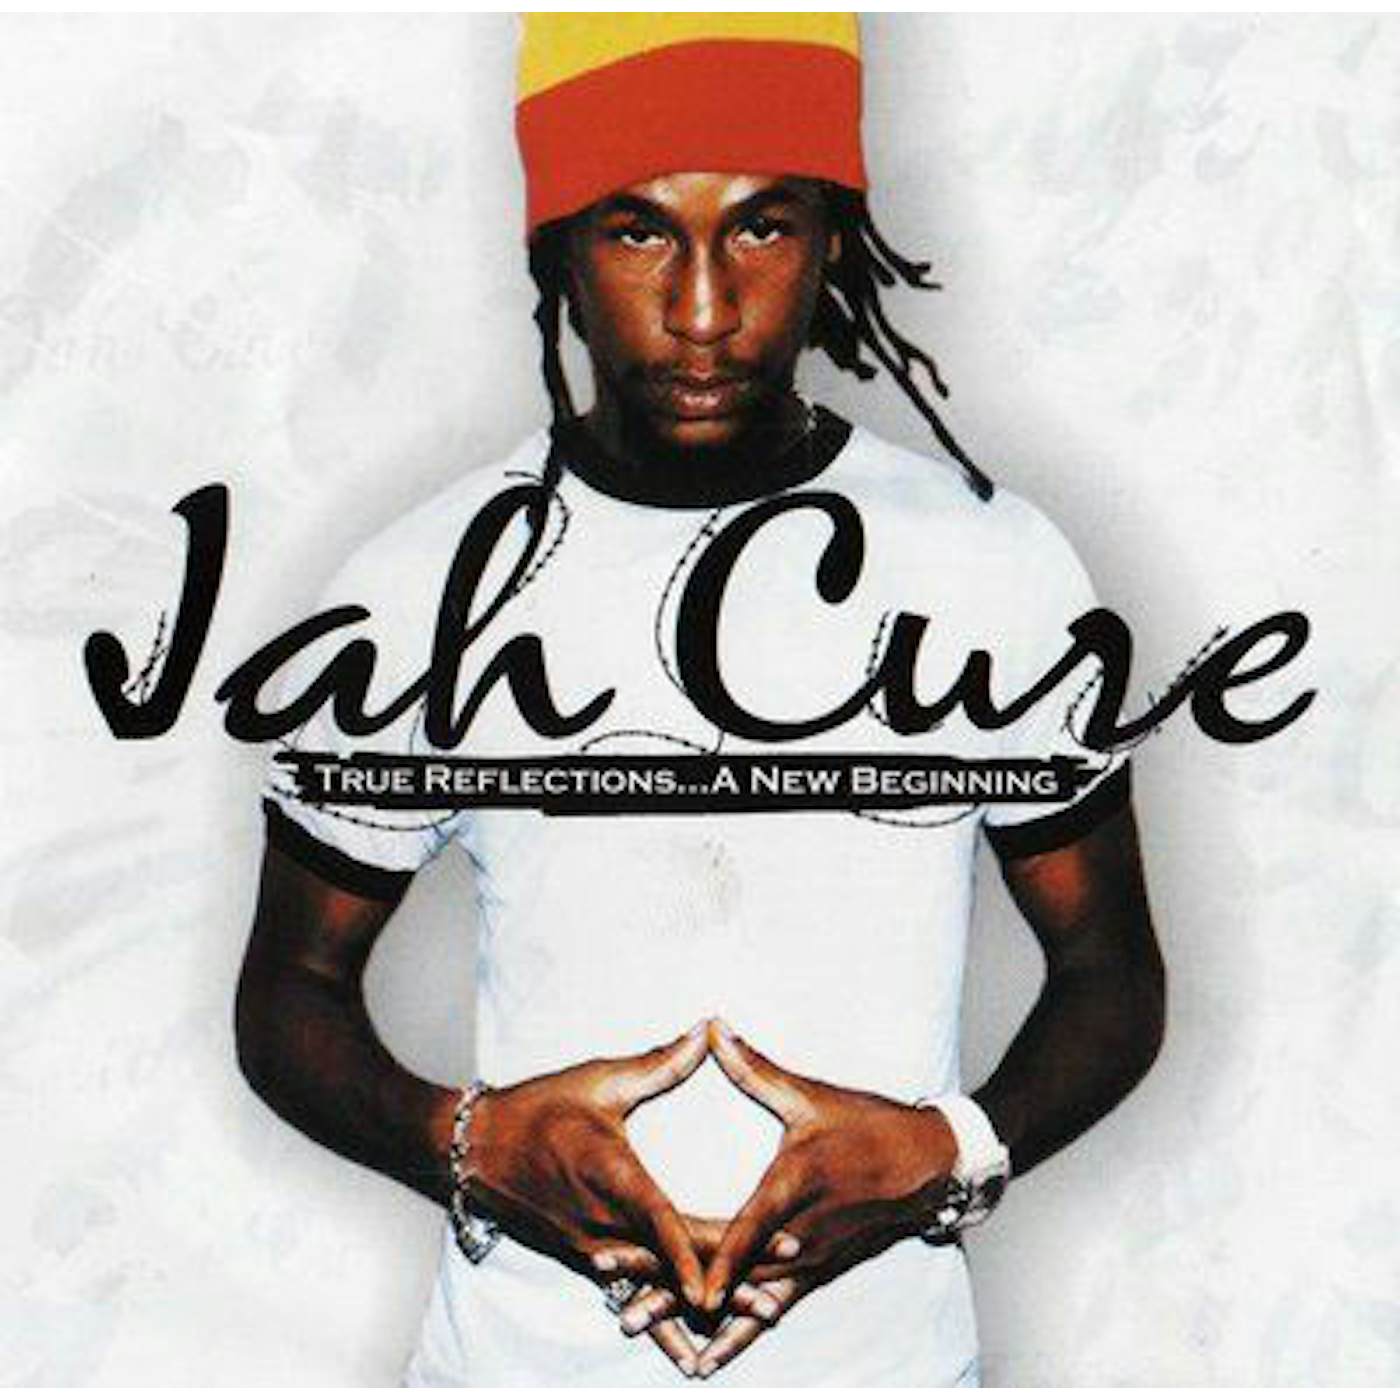 Jah Cure TRUE REFLECTION Vinyl Record